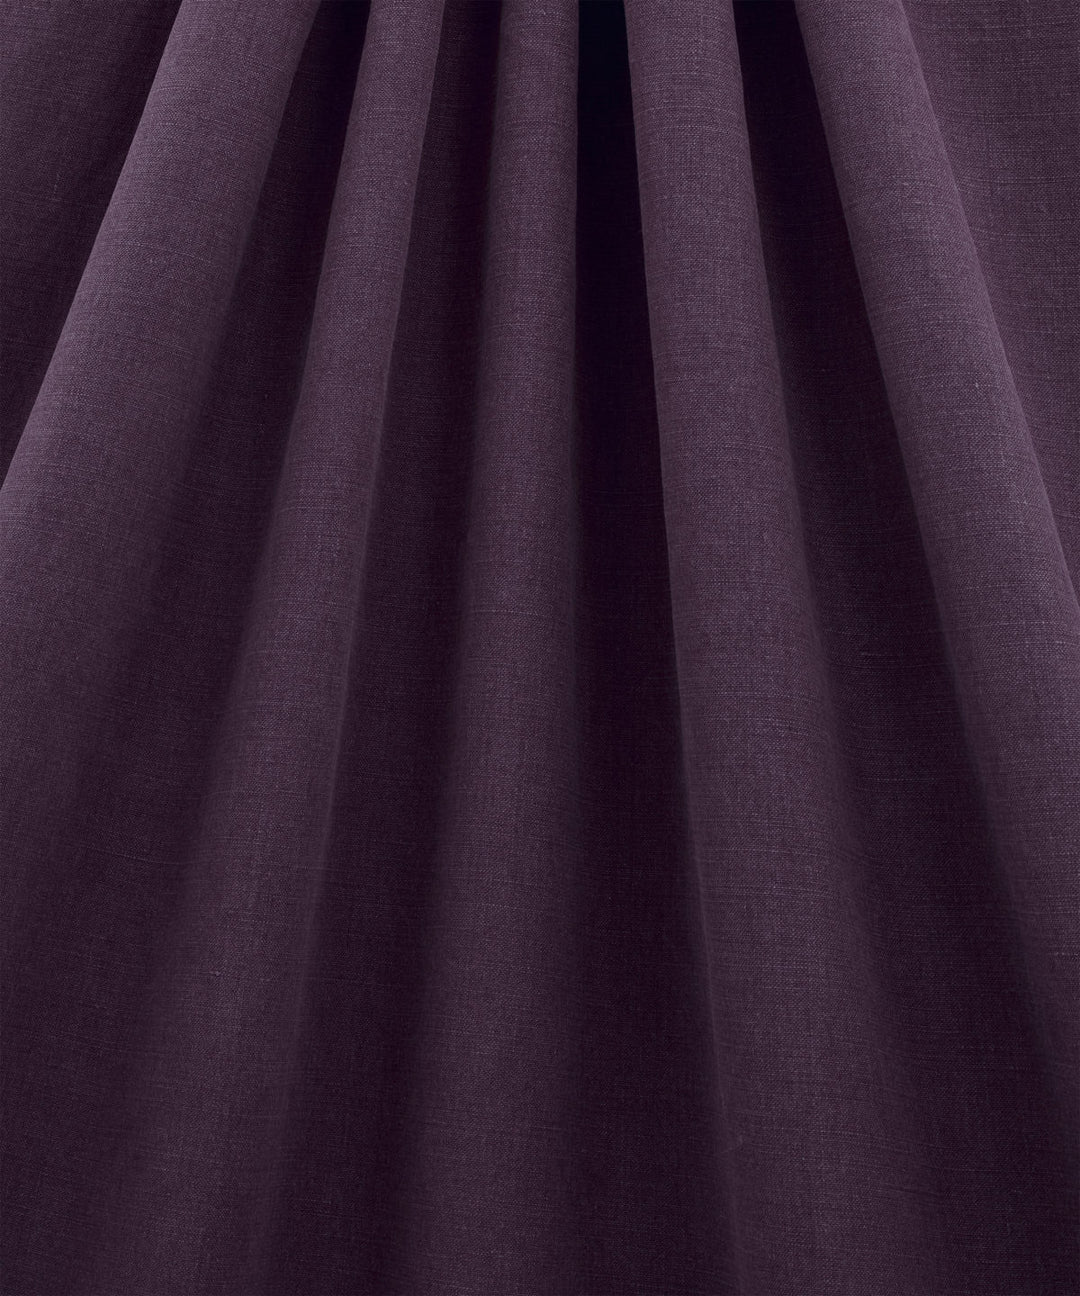 liberty-fabrics-interiors-emberton-linen-plain-brinjal-purple